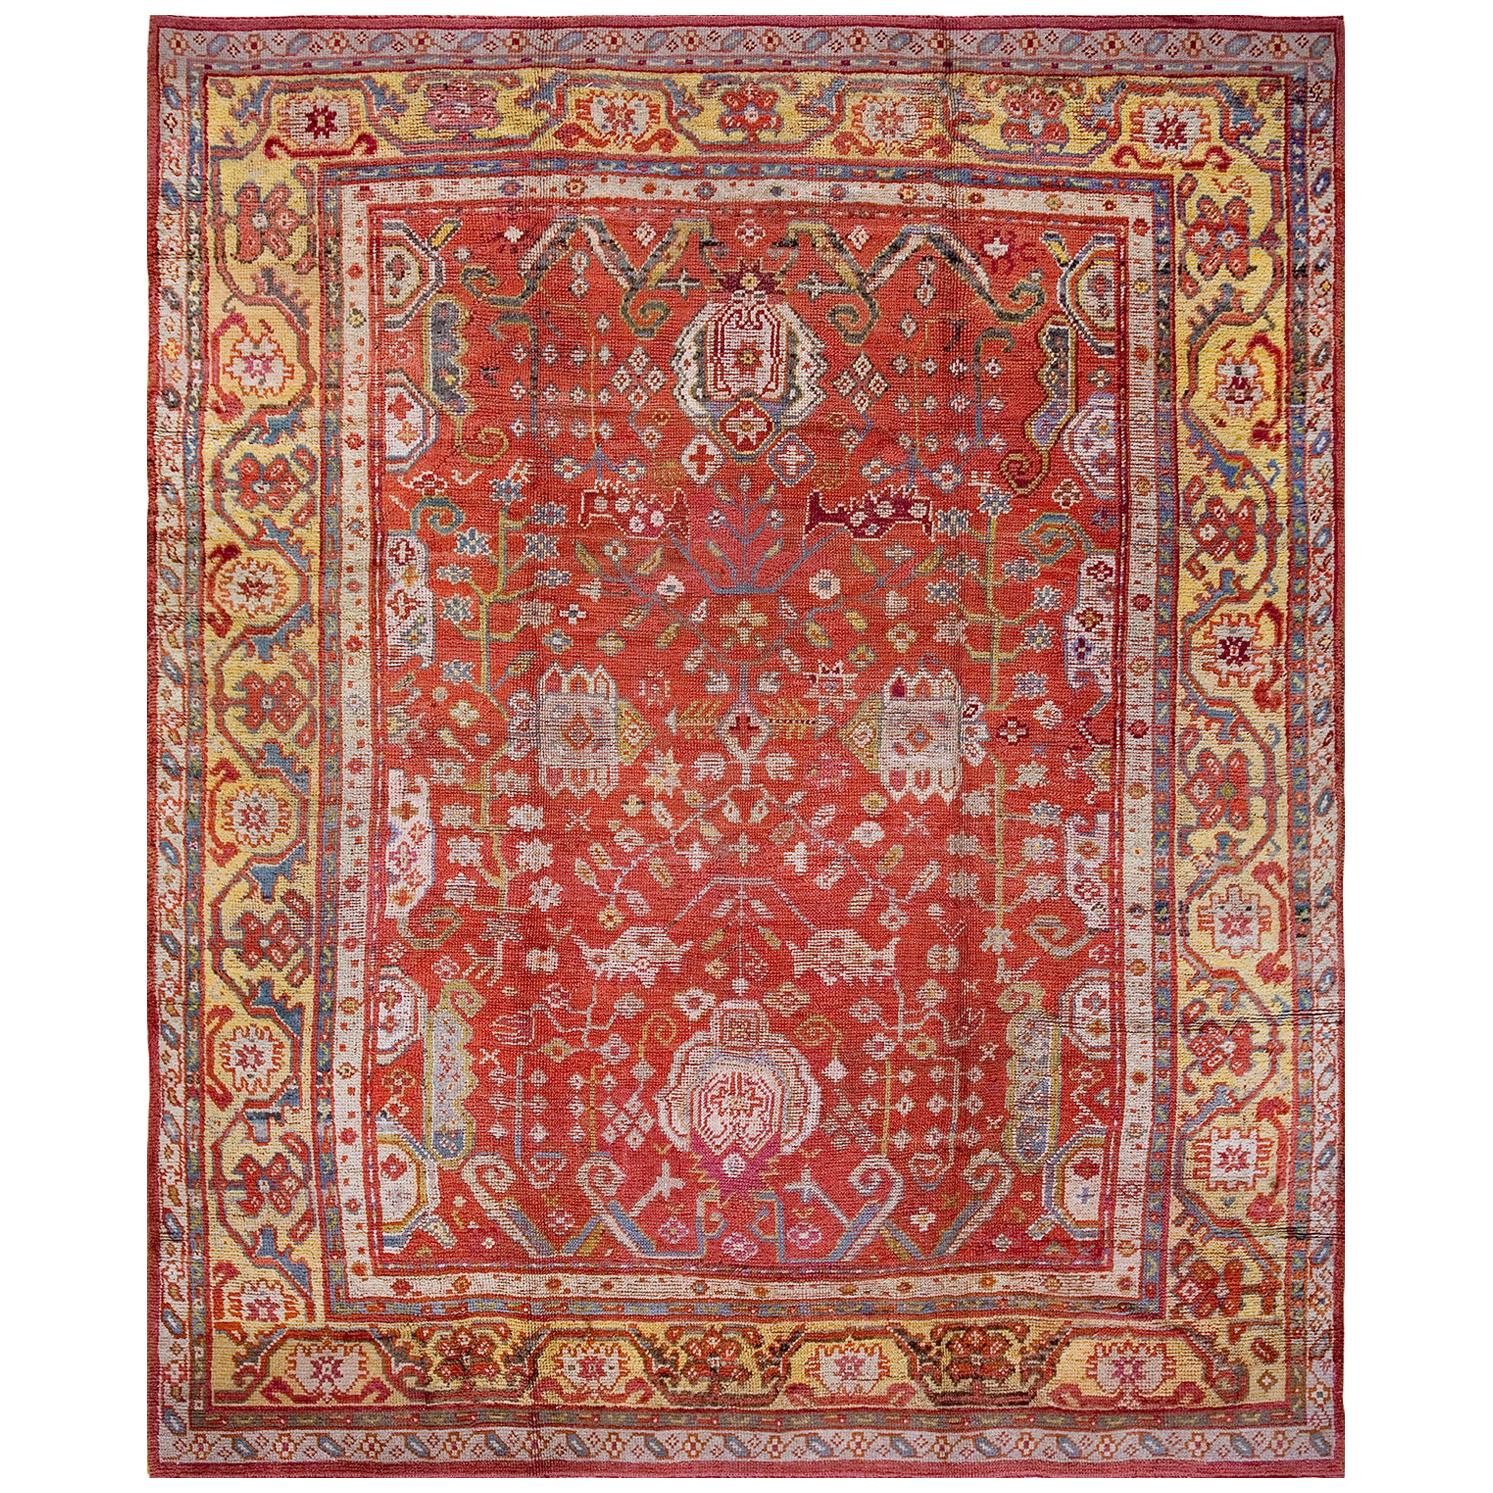 19th Century Turkish Oushak Carpet ( 9' x 11' - 275 x 335 )  For Sale